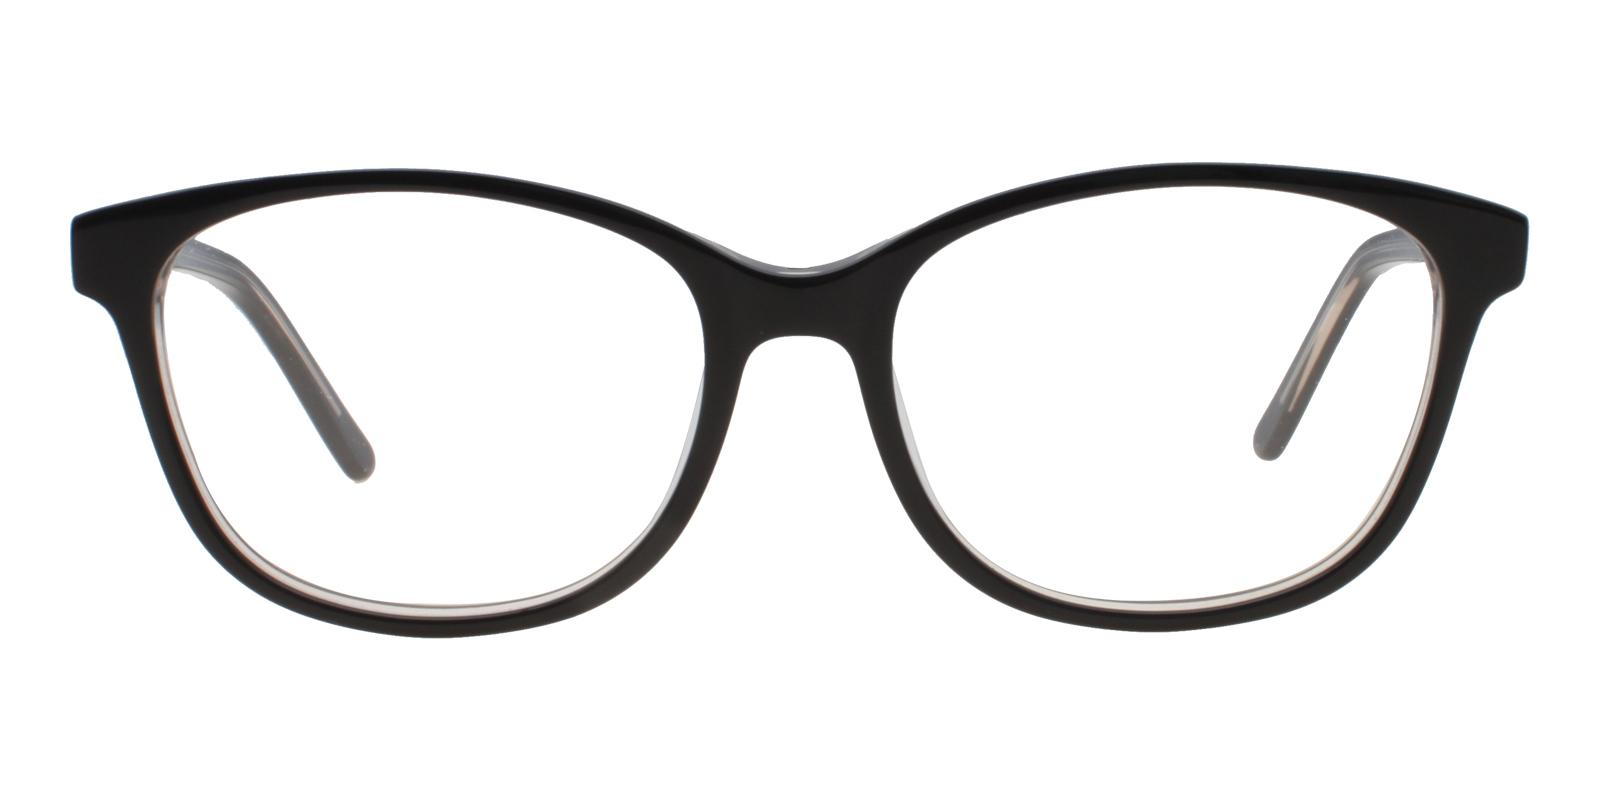 Bolivia Black Acetate Eyeglasses , SpringHinges , UniversalBridgeFit Frames from ABBE Glasses